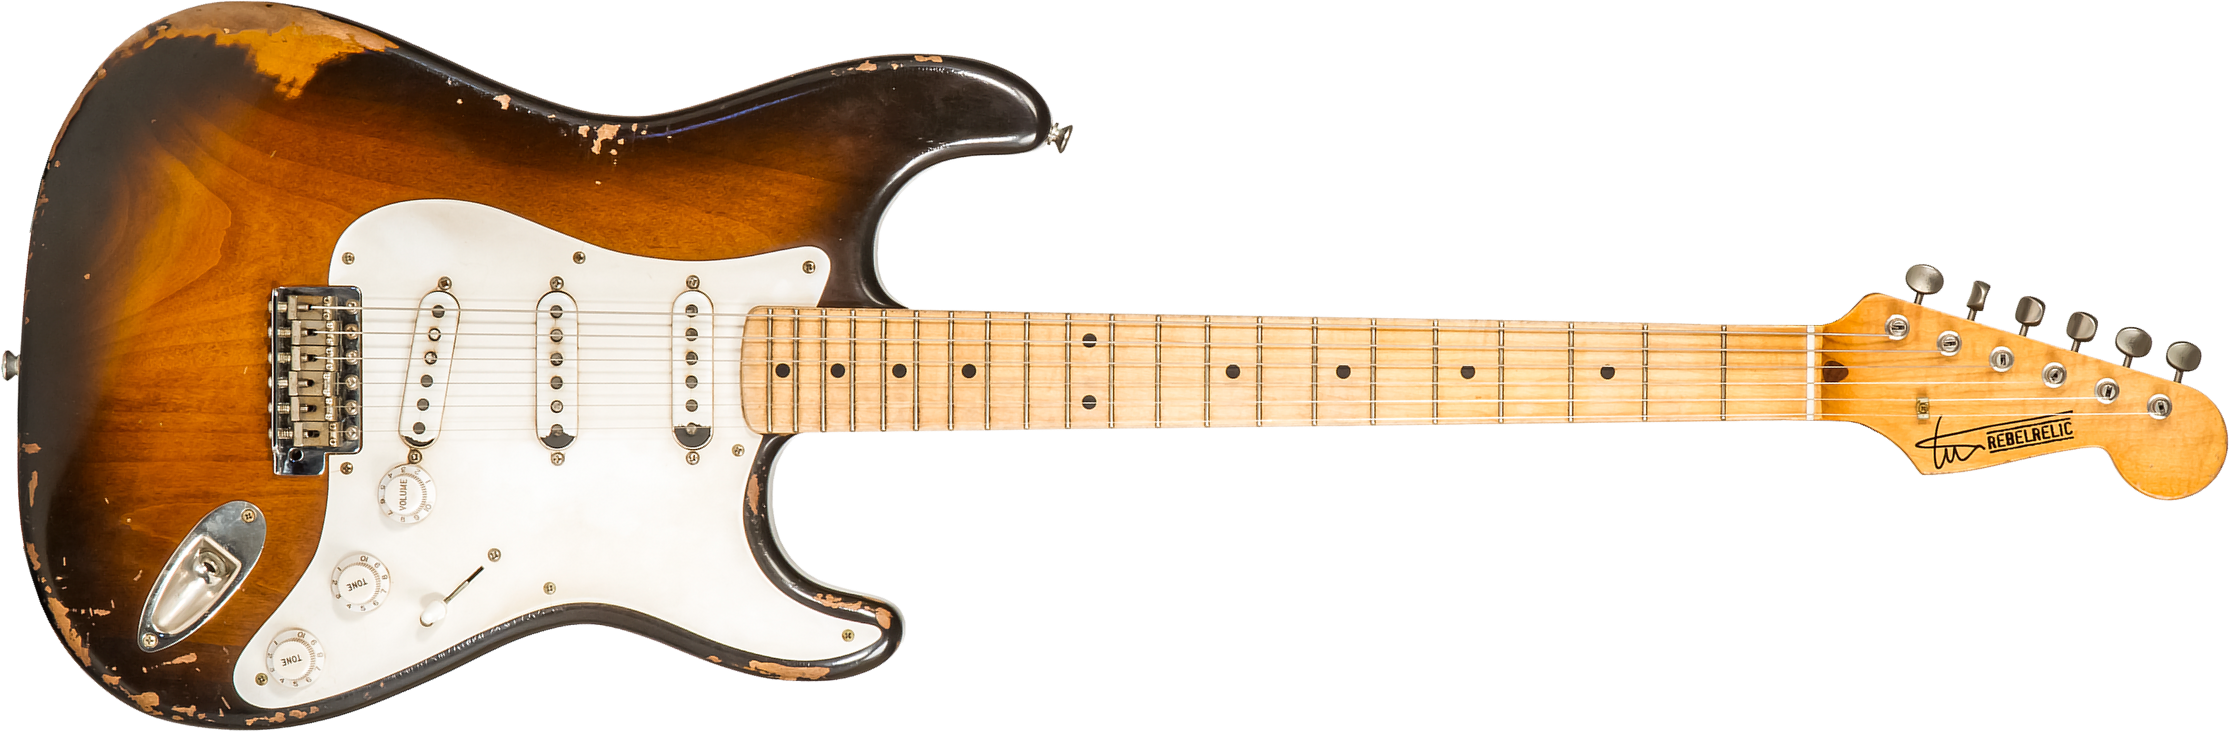 Rebelrelic S-series 54 3s Trem Mn #230103 - Medium Aged 2-tone Sunburst - Guitarra eléctrica con forma de str. - Main picture